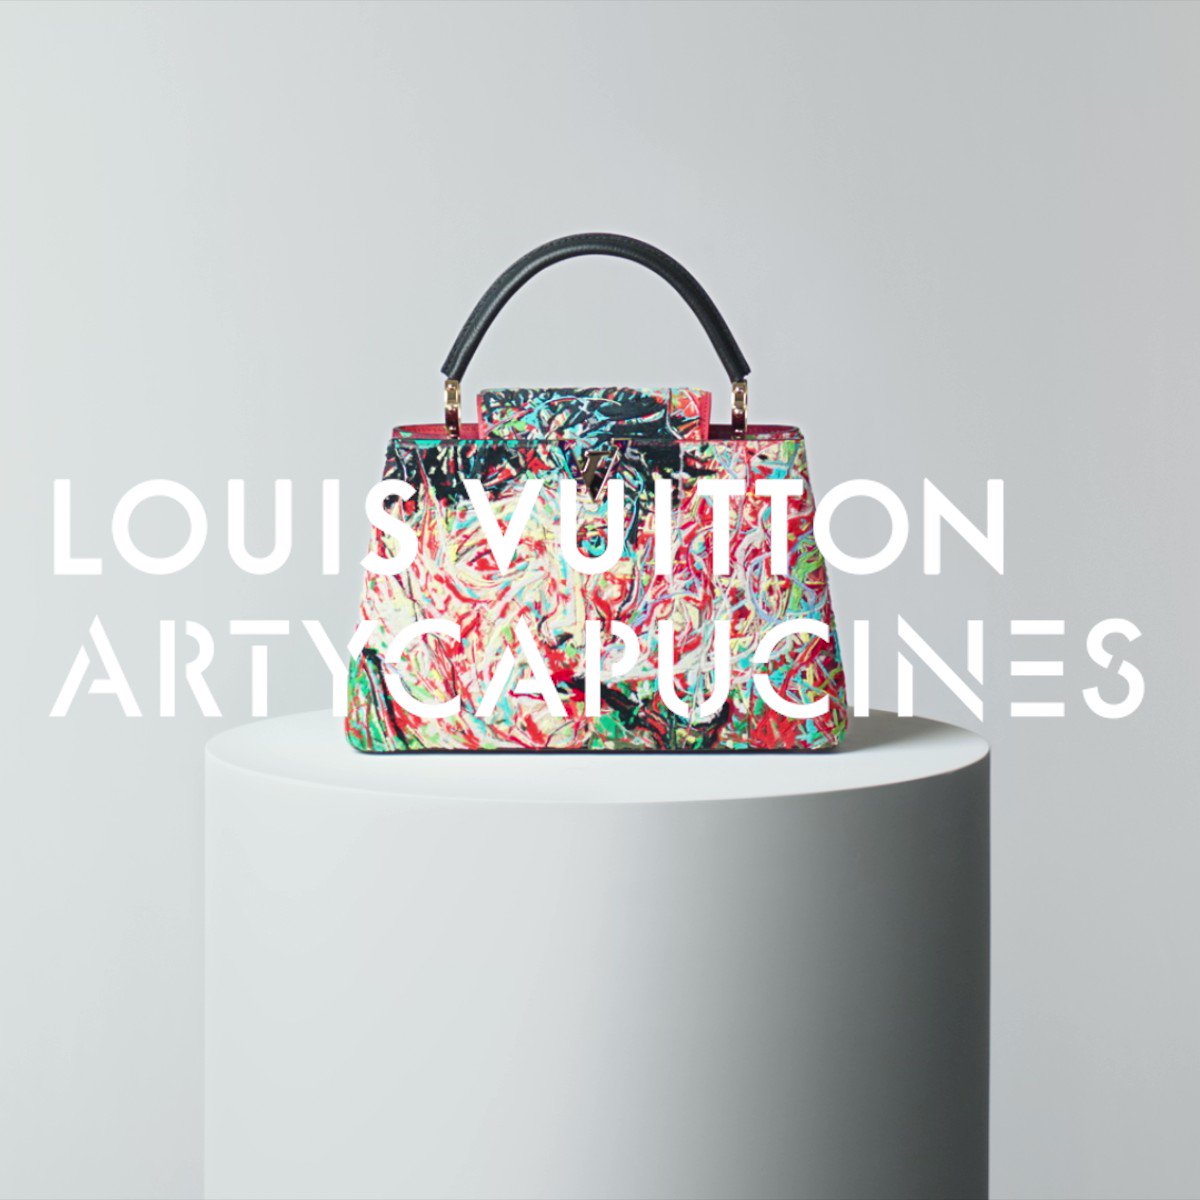 Louis Vuitton Large Print Tote